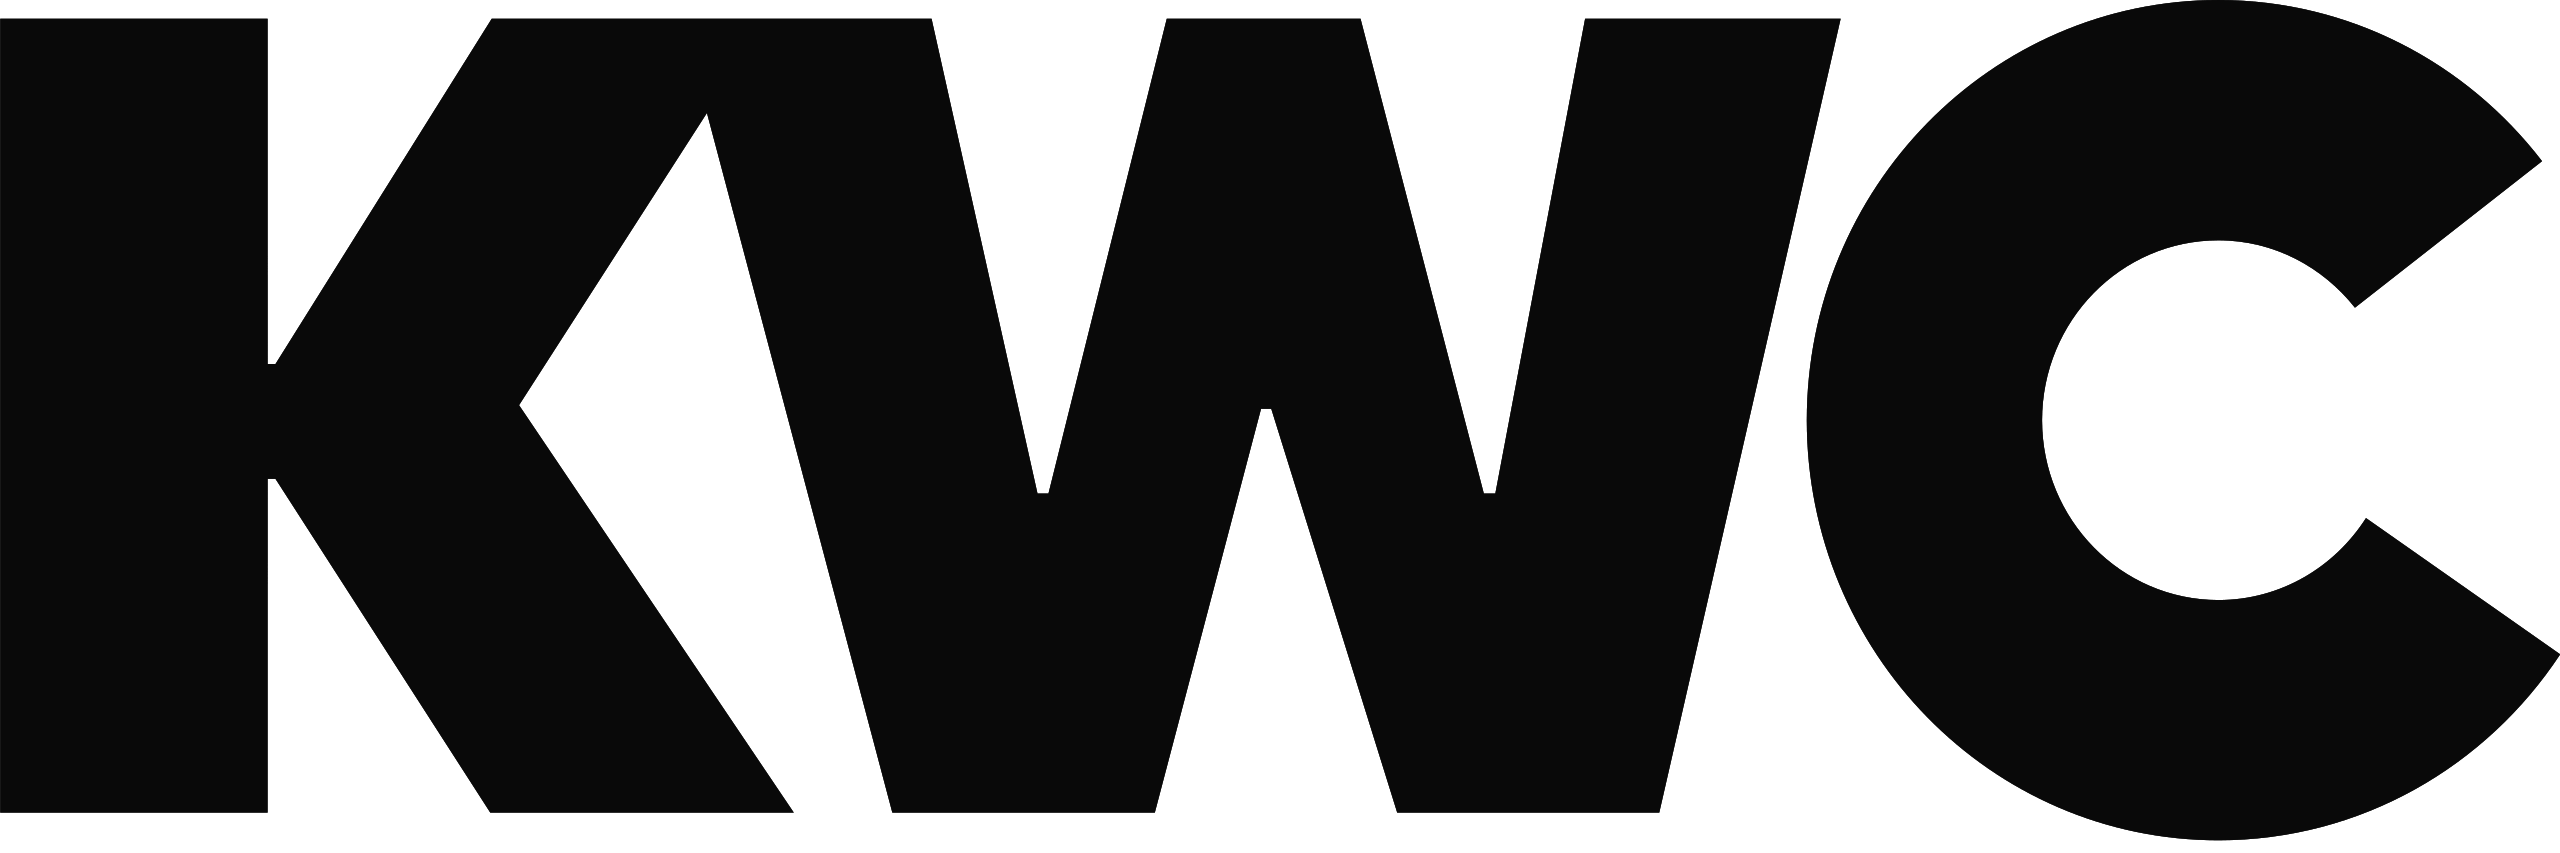 The KWC logo.